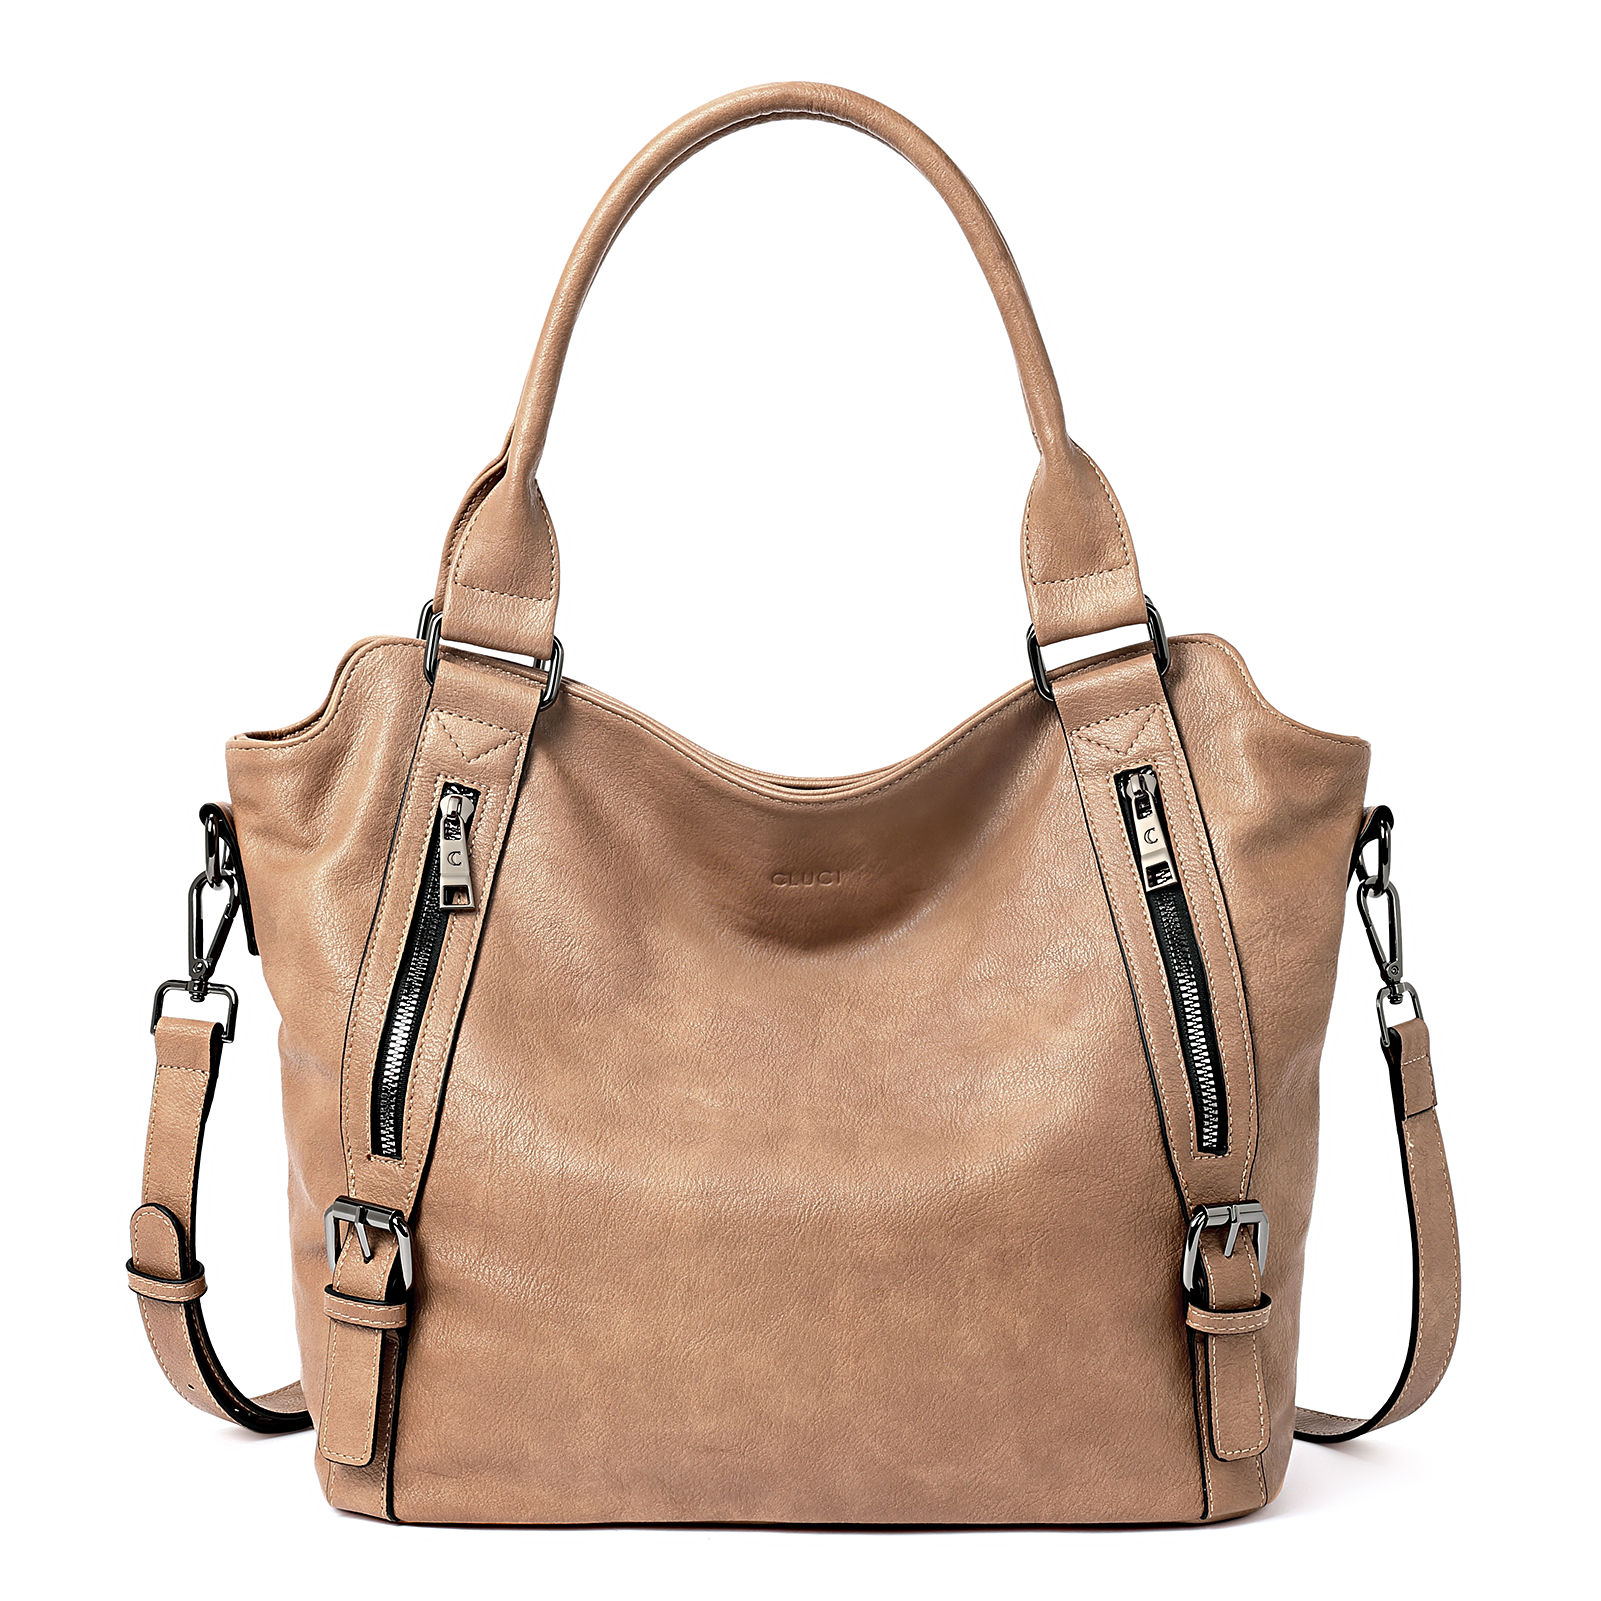 Plaid Red American Living Shoulder Bag Handbag Purse Ladies Bag aa72 | eBay